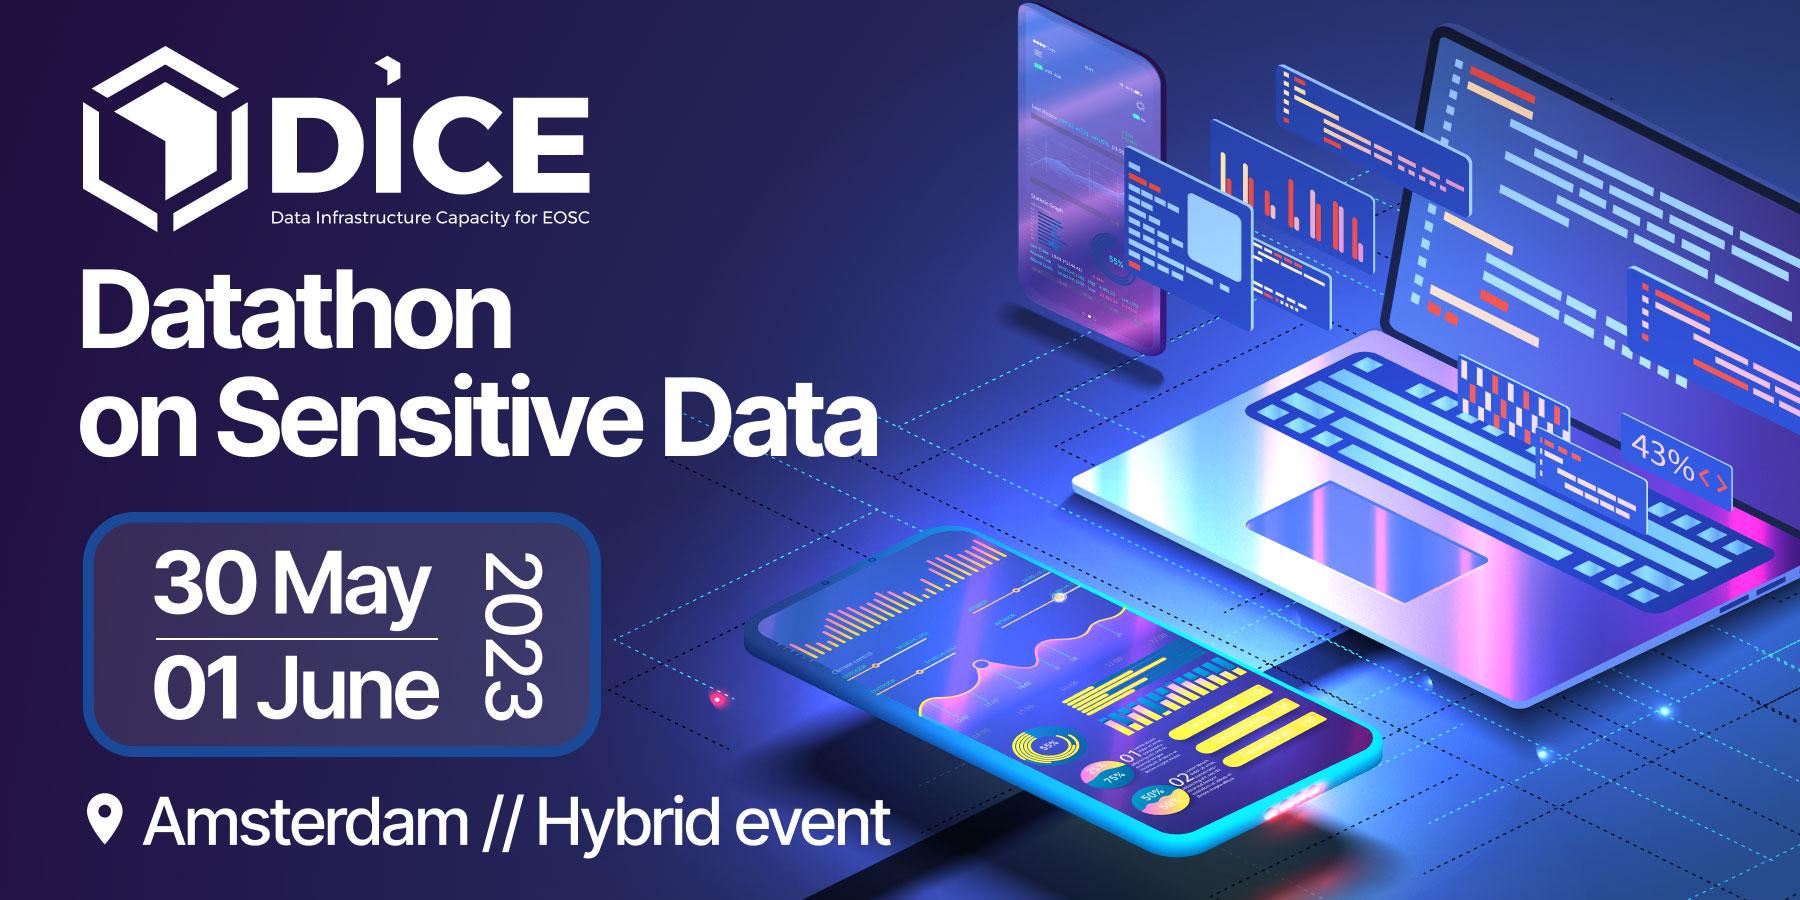 DICE - Datathon on Sensitive Data